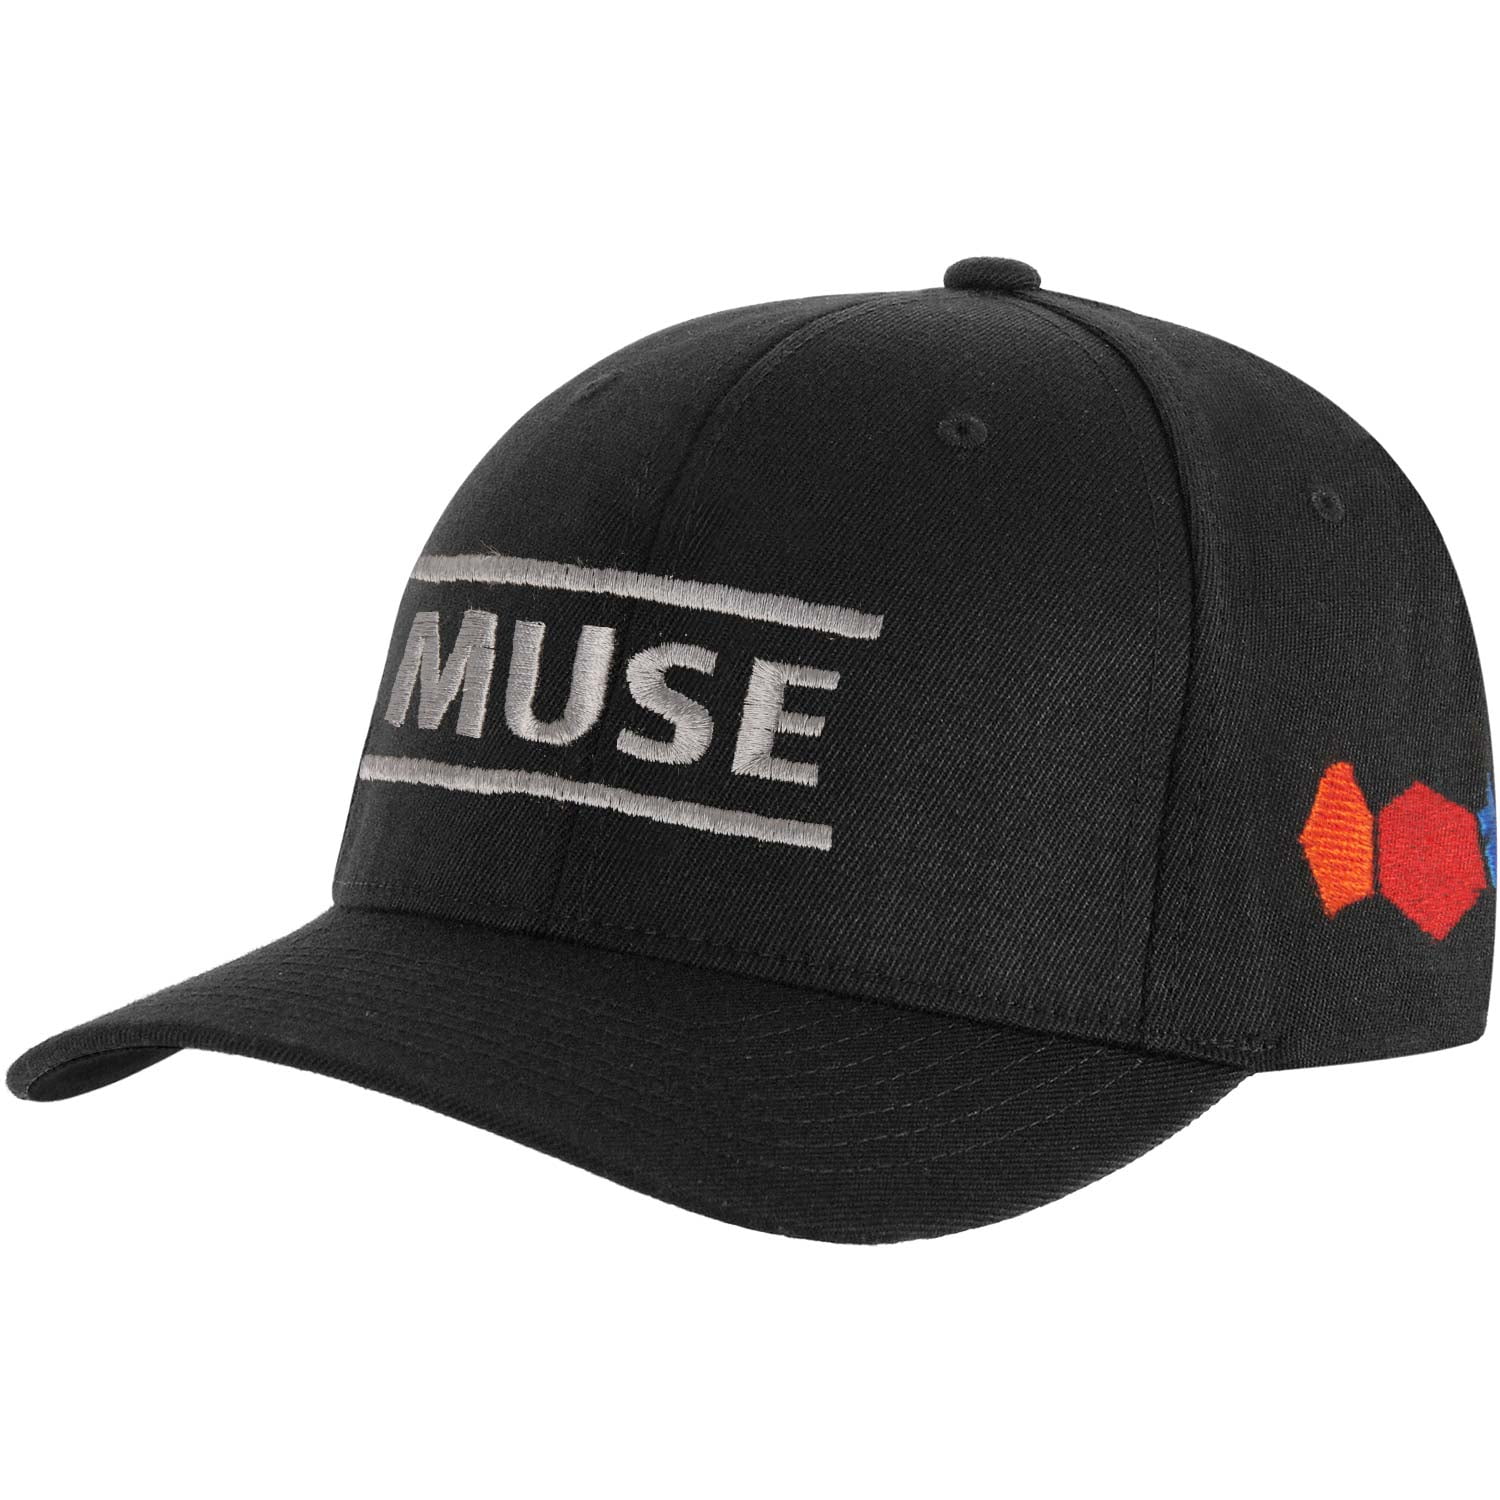 Muse - Muse Men's The Resistance Baseball Cap Black - Walmart.com ...